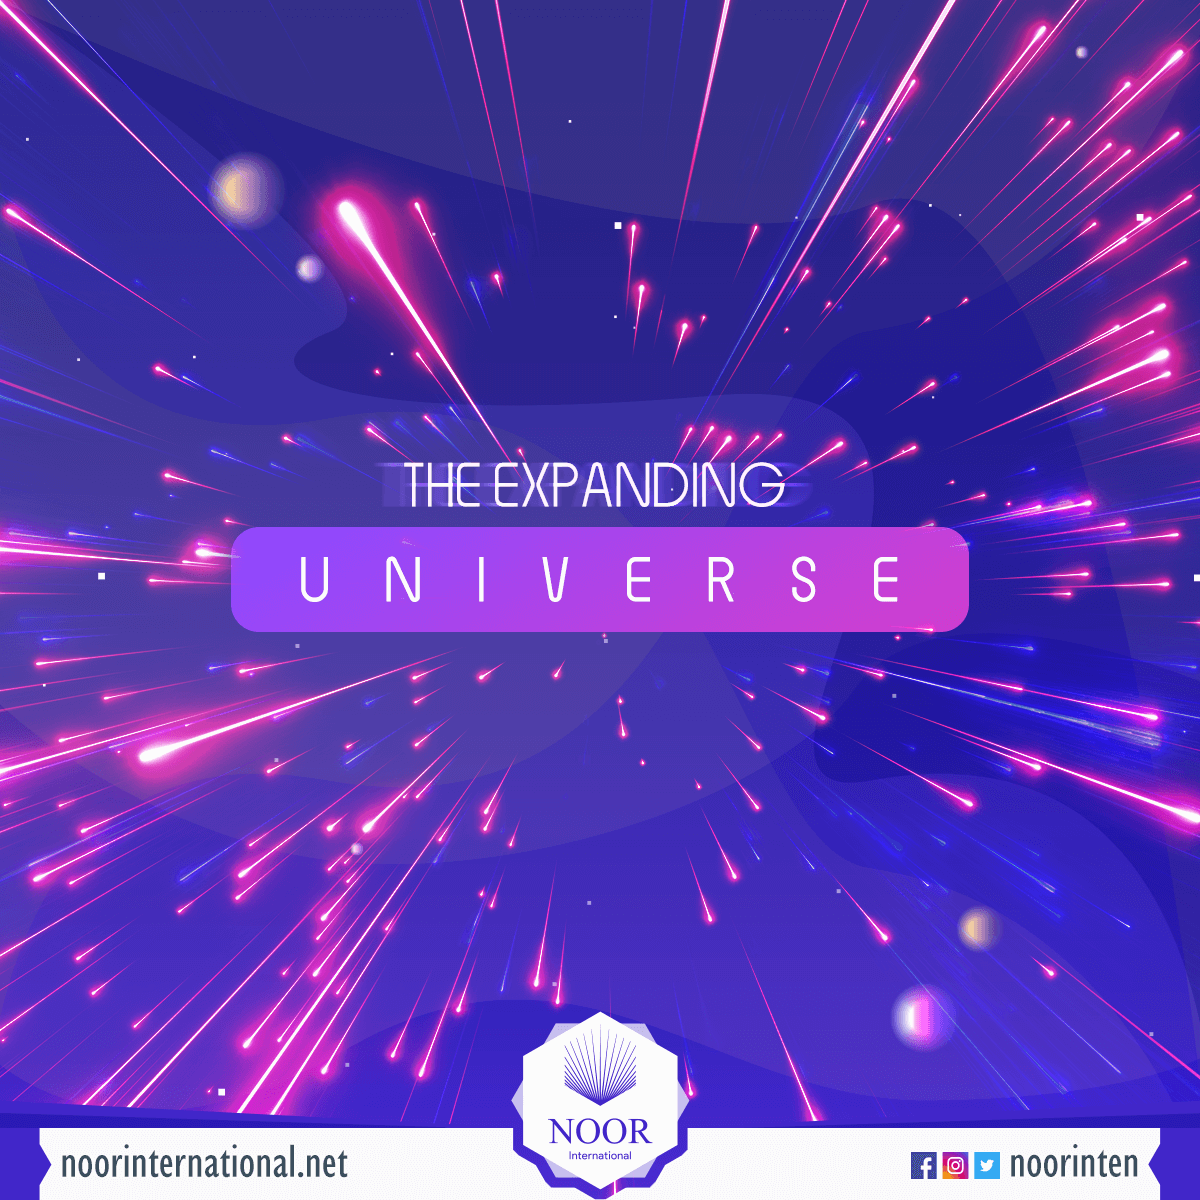 THE EXPANDING UNIVERSE